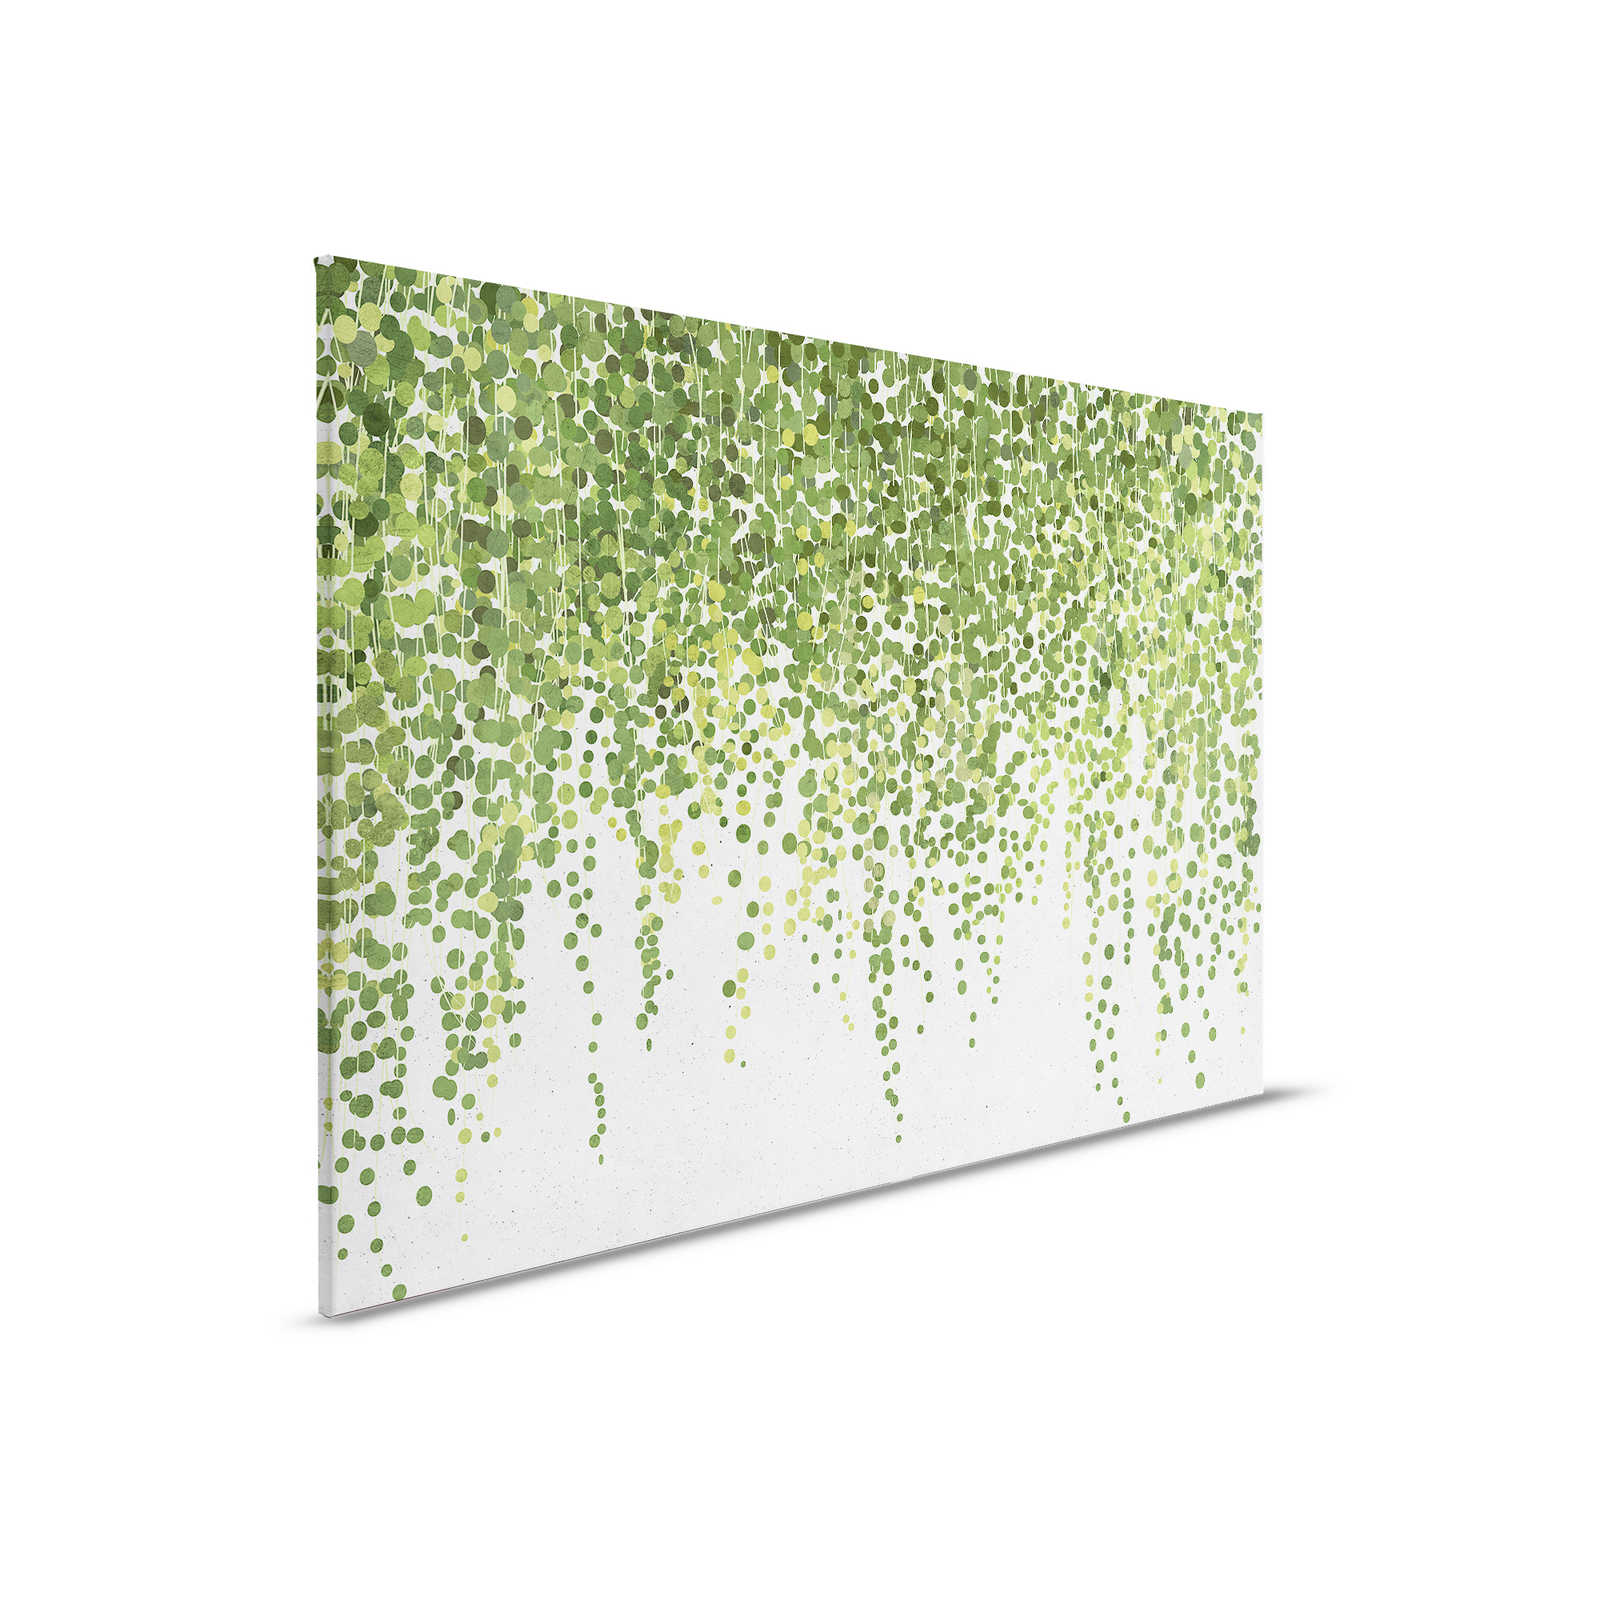         Hanging Garden 1 - Leinwandbild Blätter-Ranken, Hängegarten – 0,90 m x 0,60 m
    